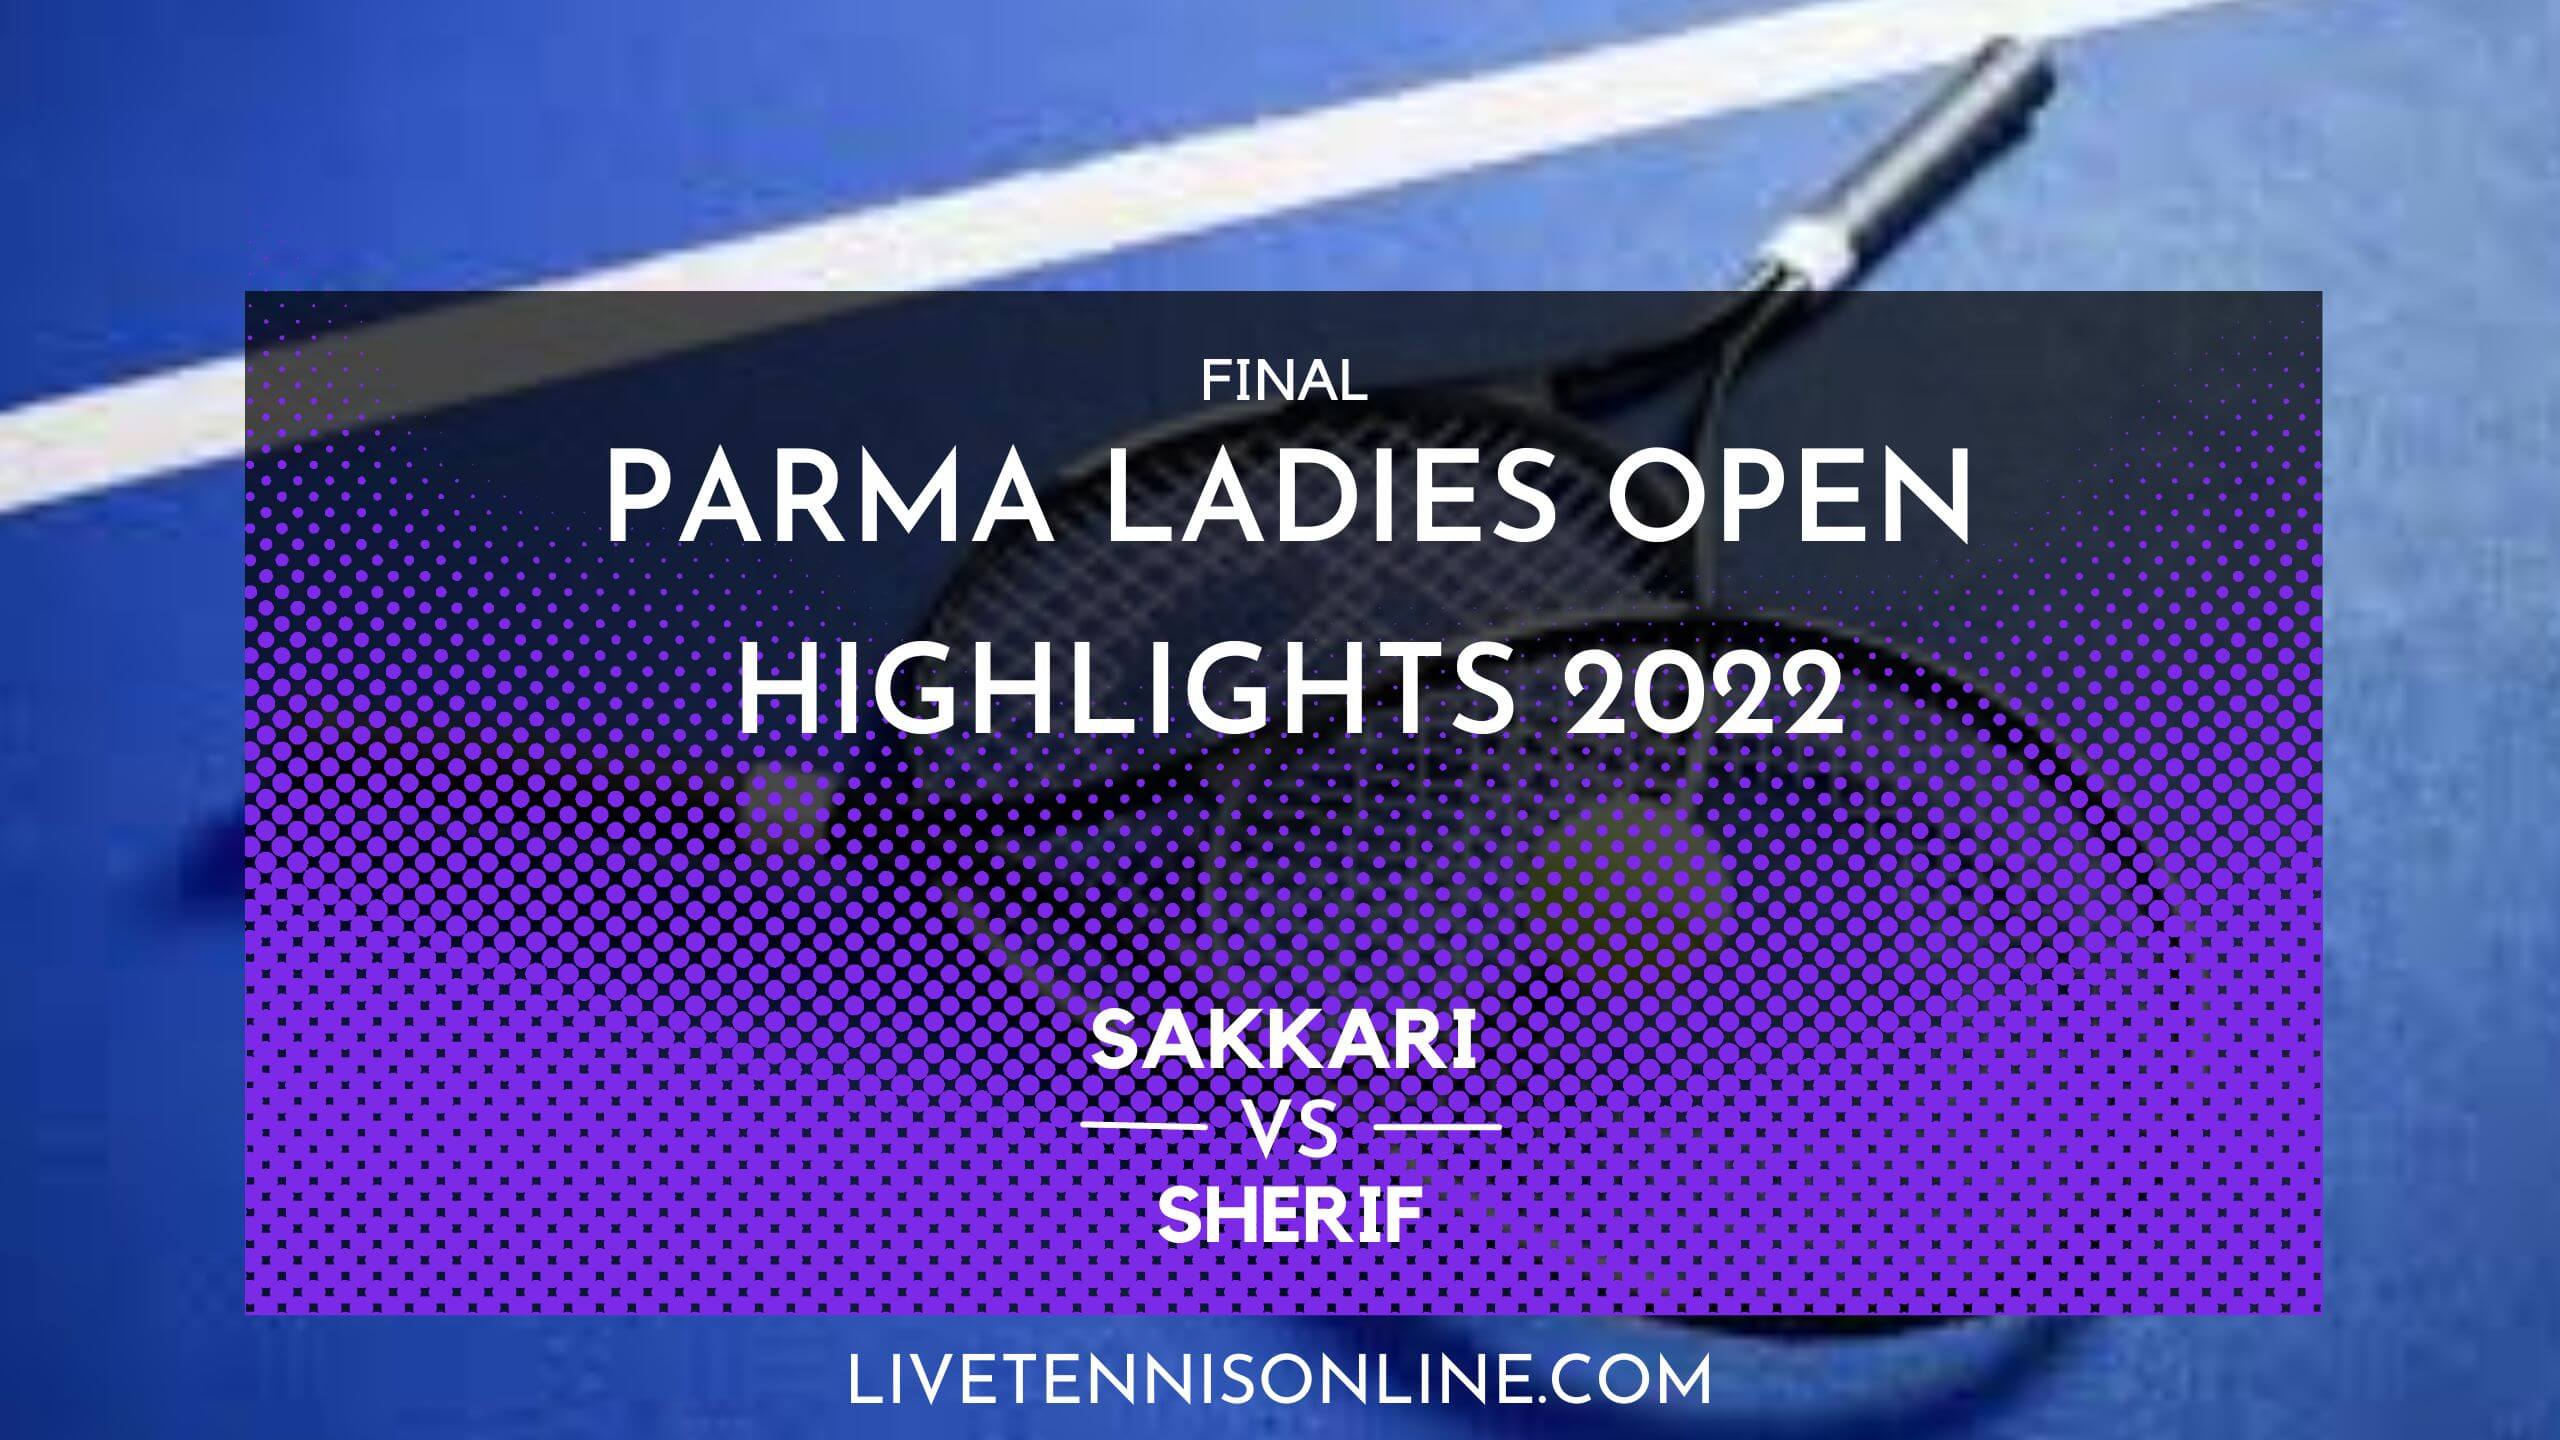 Sakkari Vs Sherif Final Highlights 2022 Parma Ladies Open